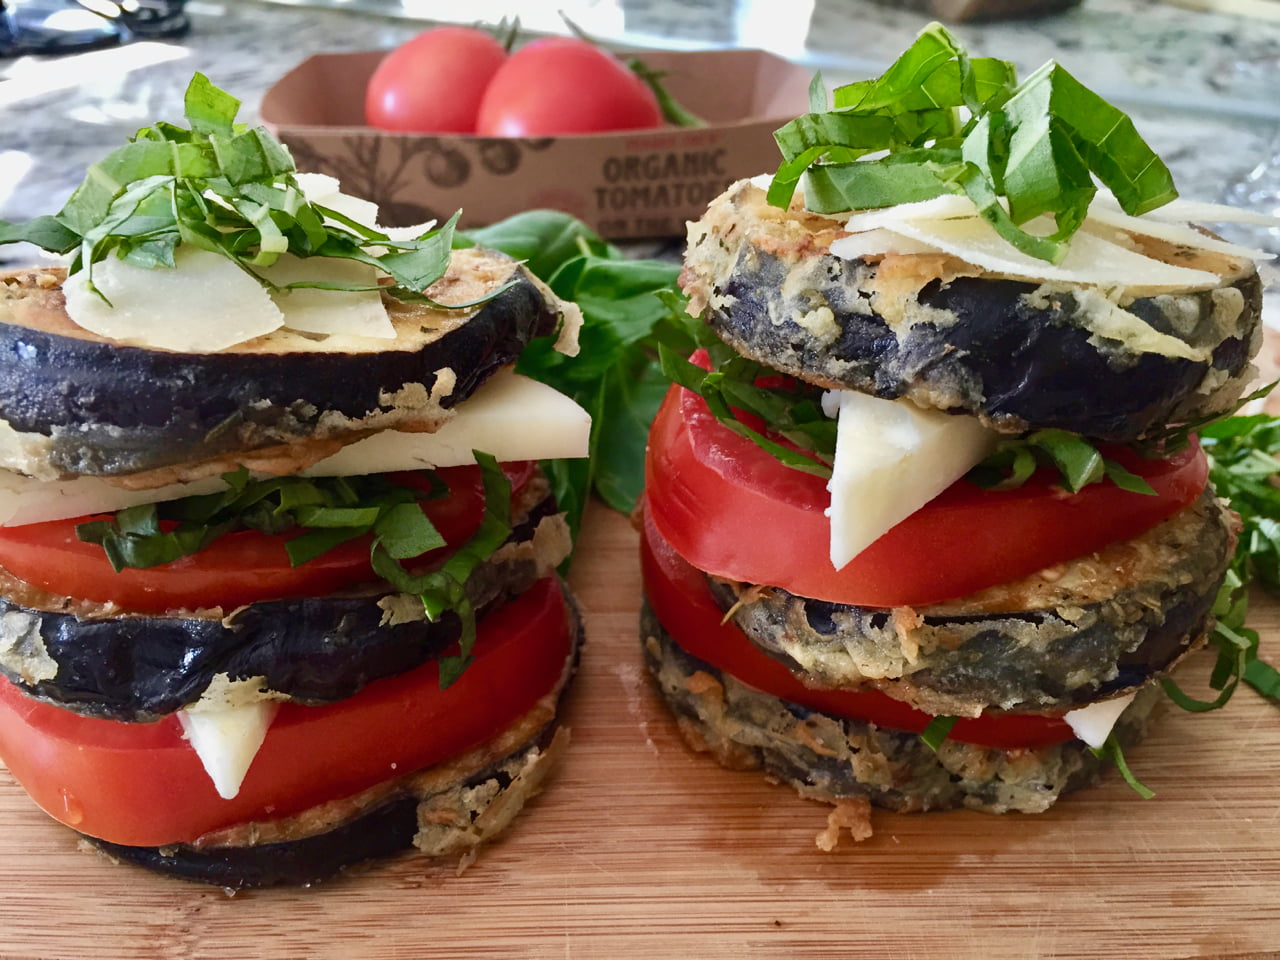 Mediterranean Eggplant and Tomato Stacks